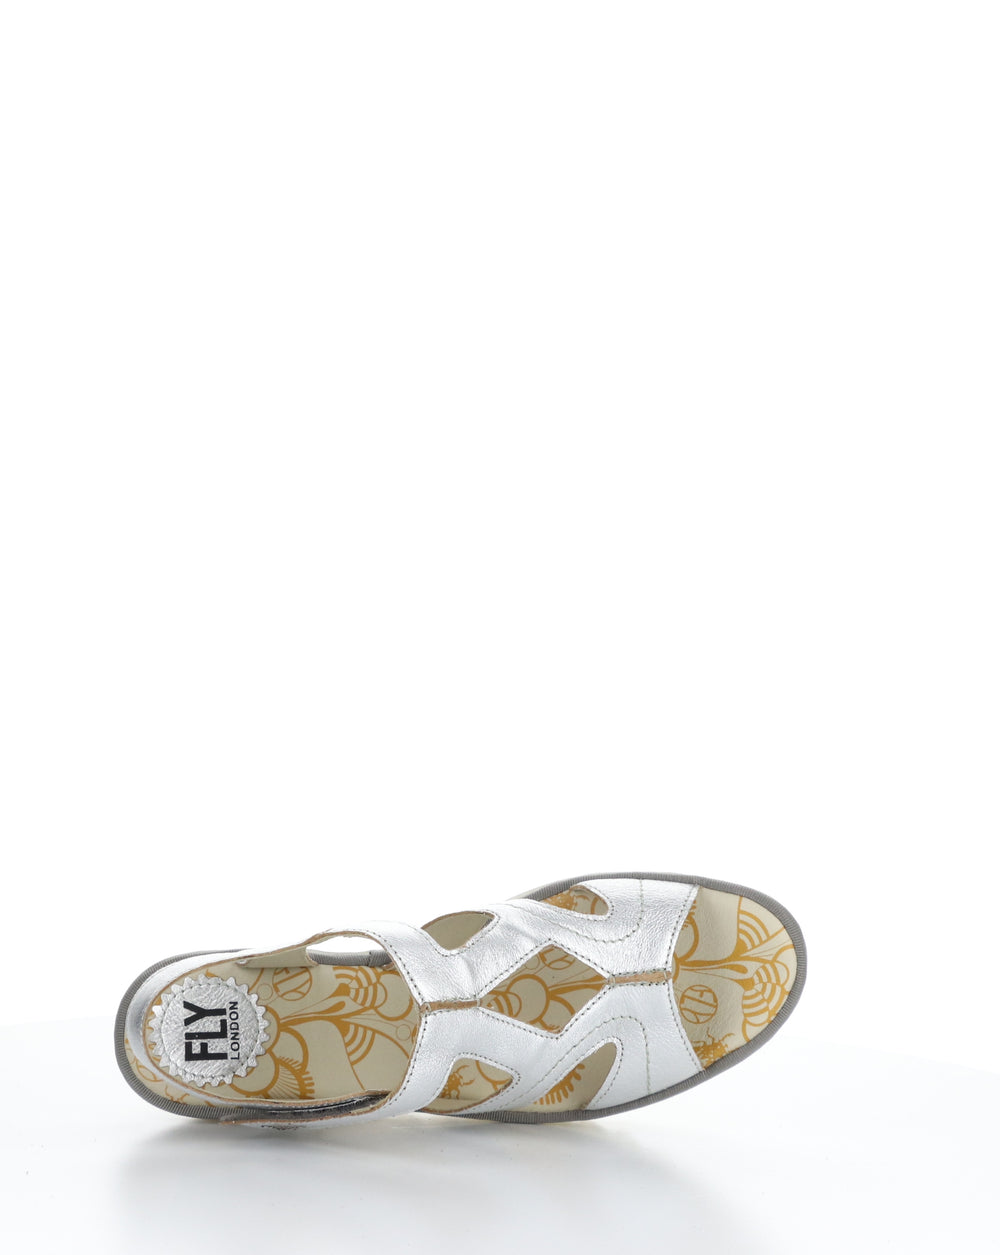 YOTU472FLY Silver Velcro Sandals